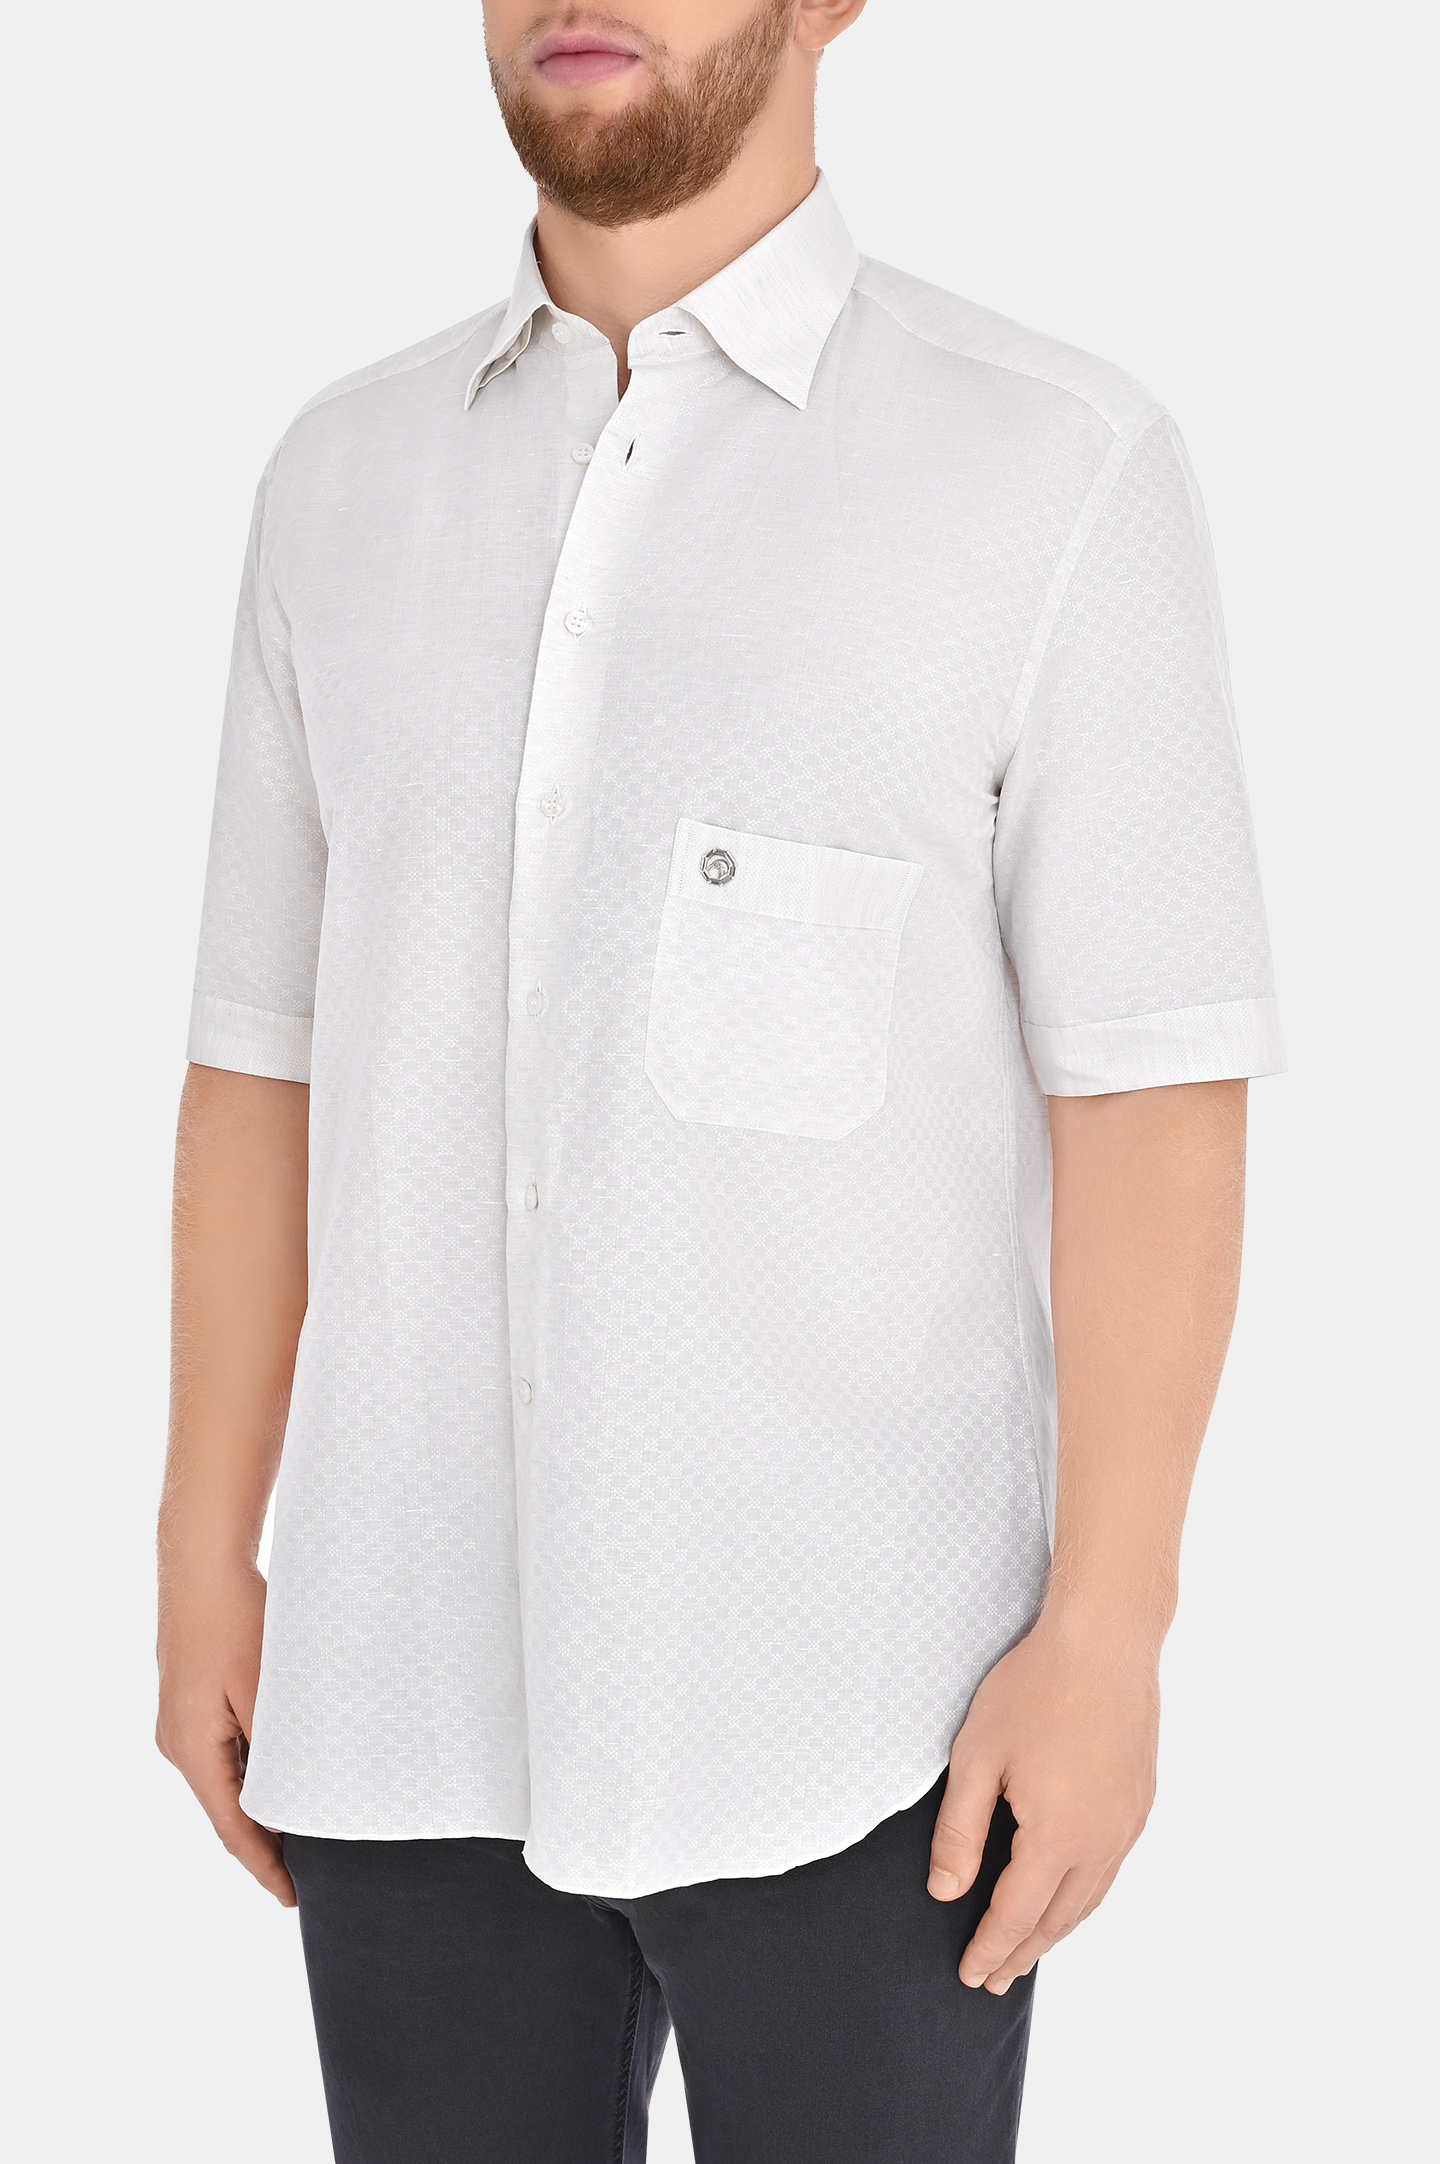 Рубашка STEFANO RICCI MC006721 R2558, цвет: Молочный, Мужской